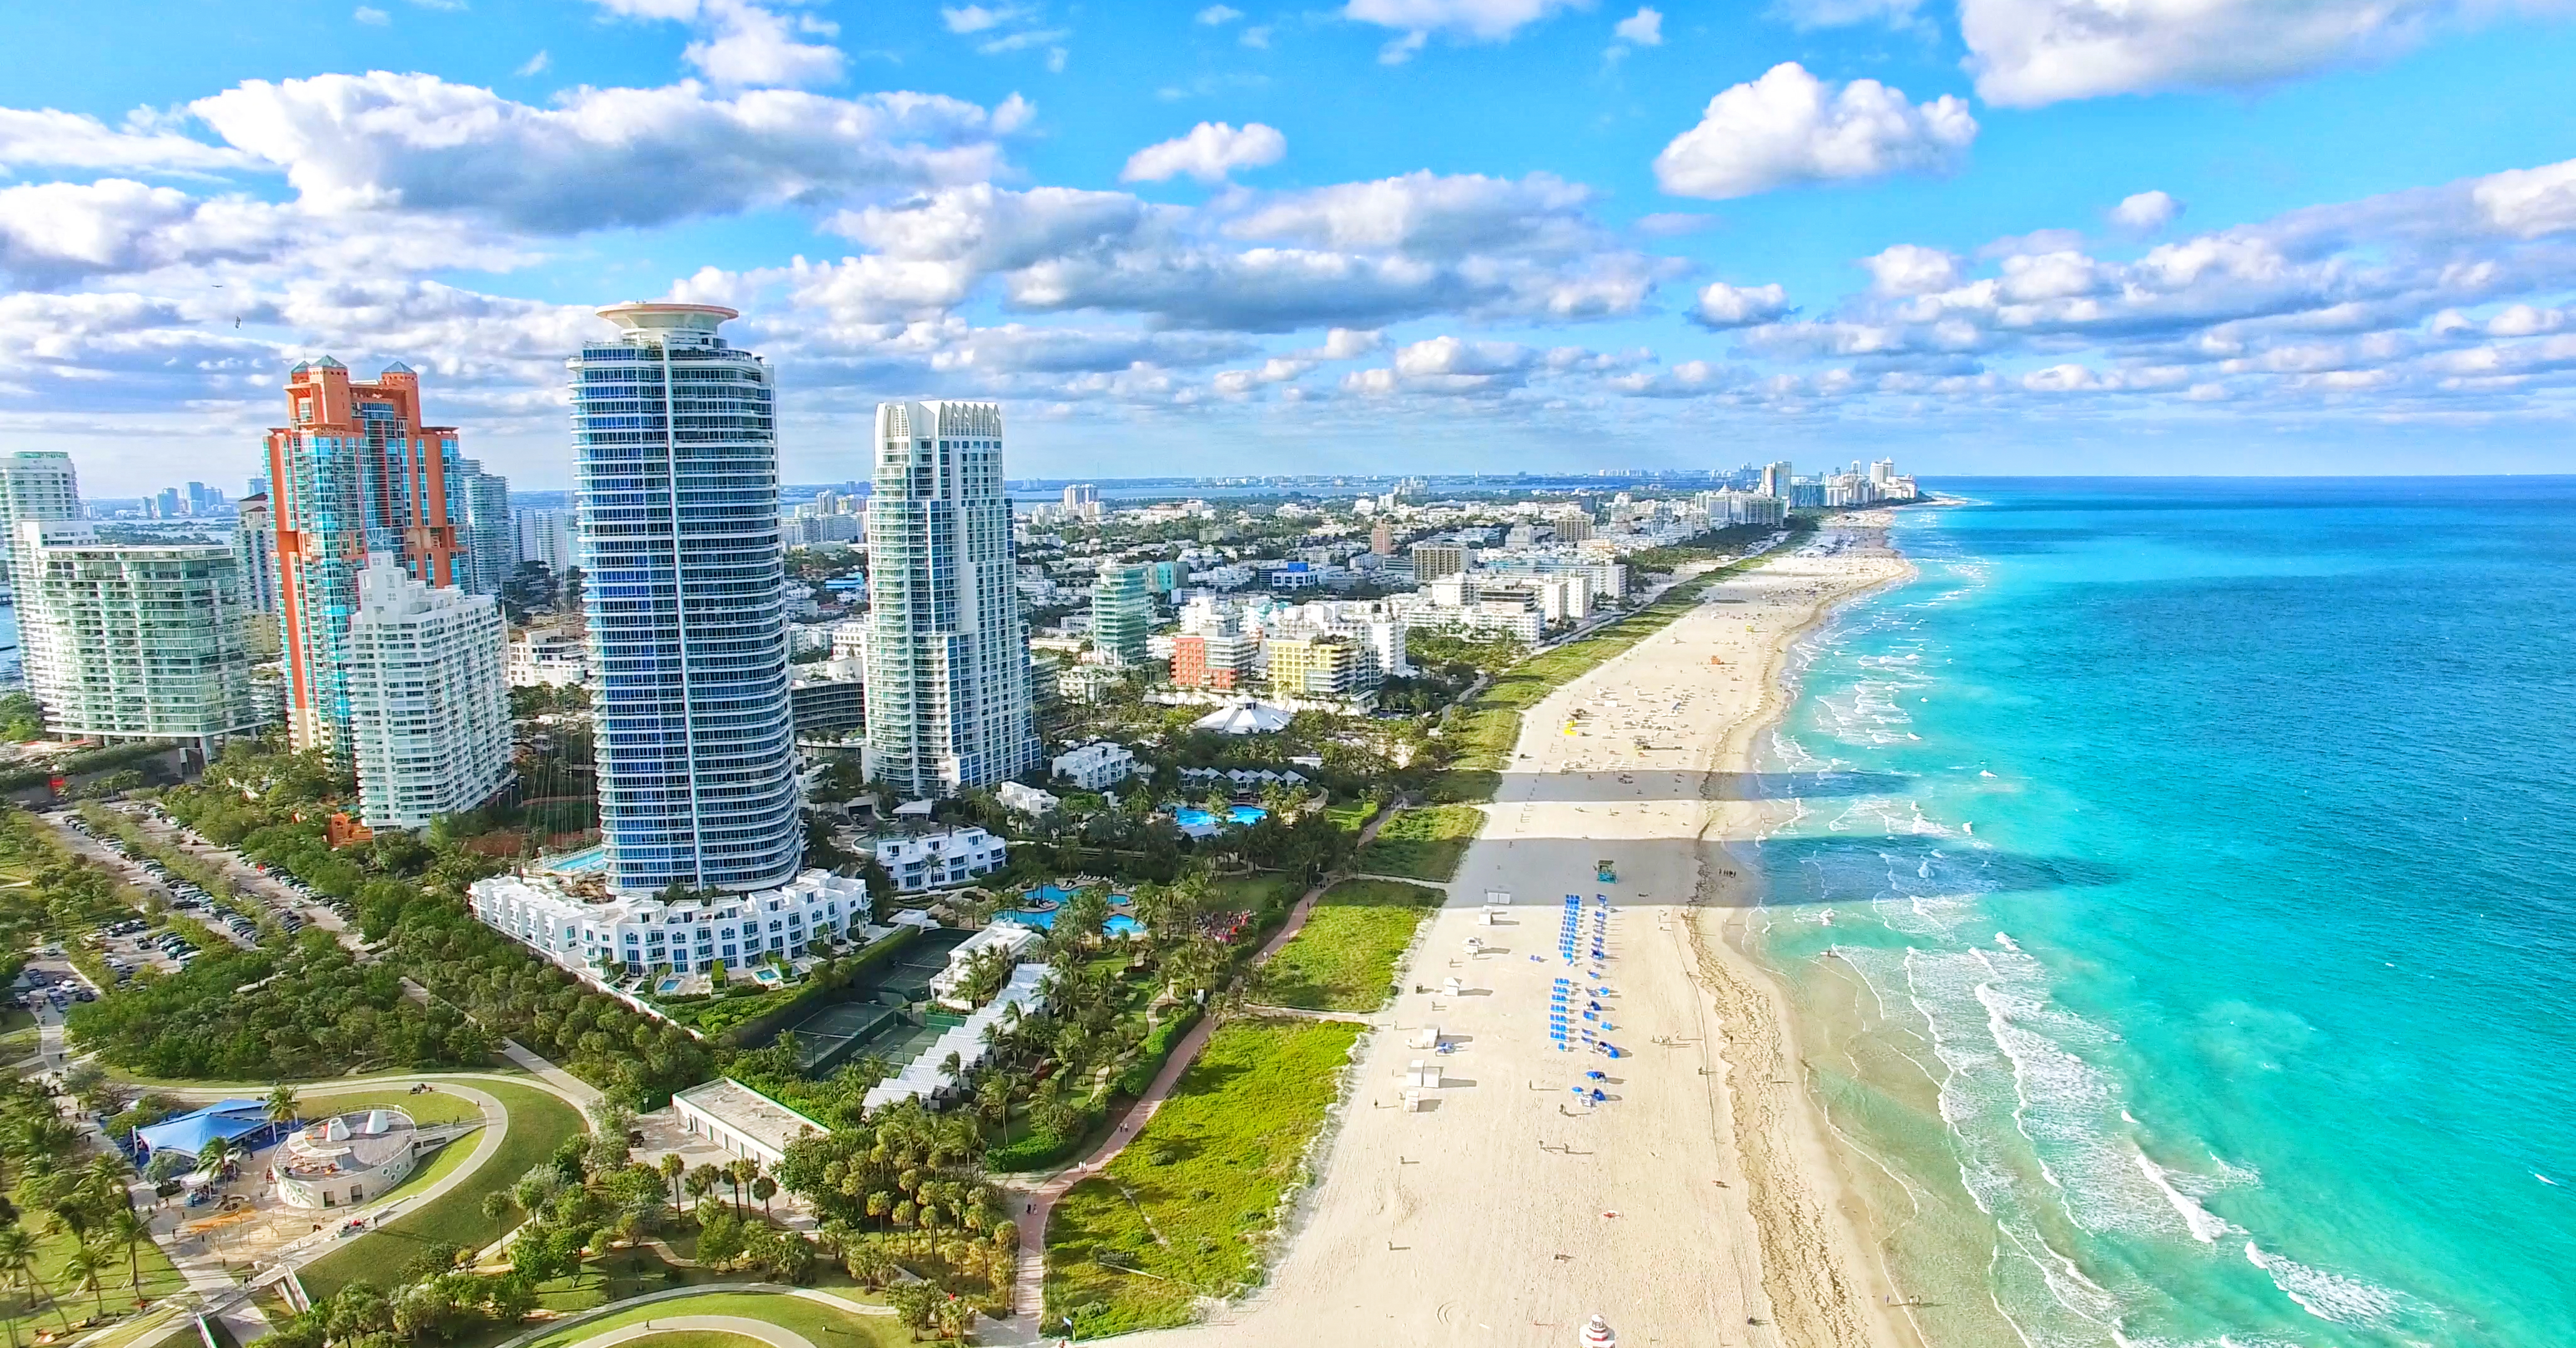 South Beach, Miami Beach. Florida. | Source: Shutterstock